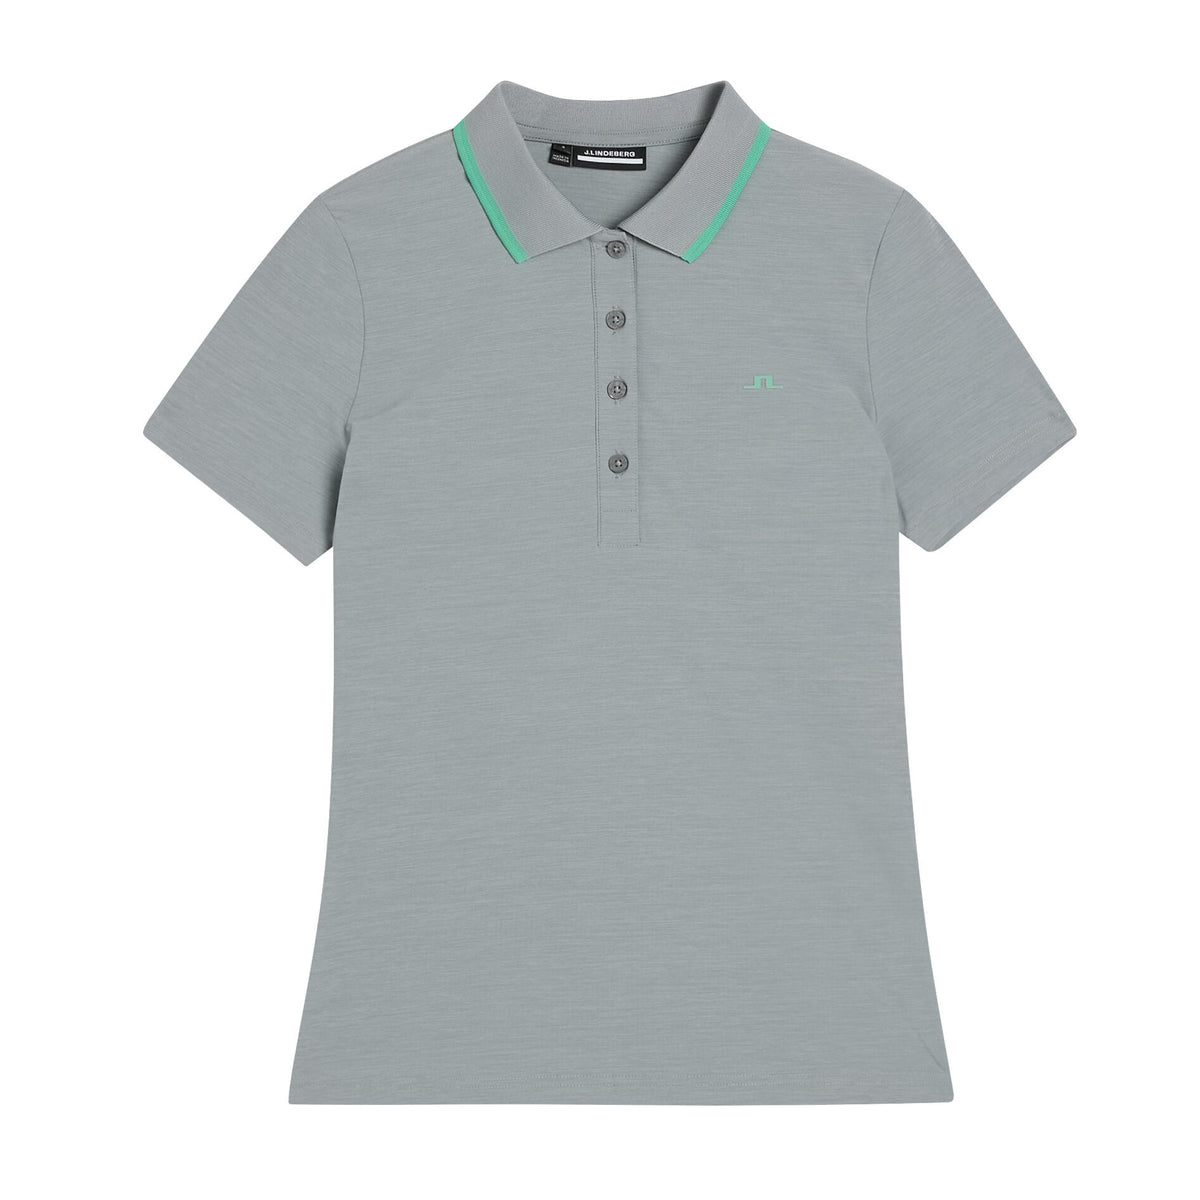 J.Lindeberg Women's Lily Golf Polo Shirt - Grey Melange